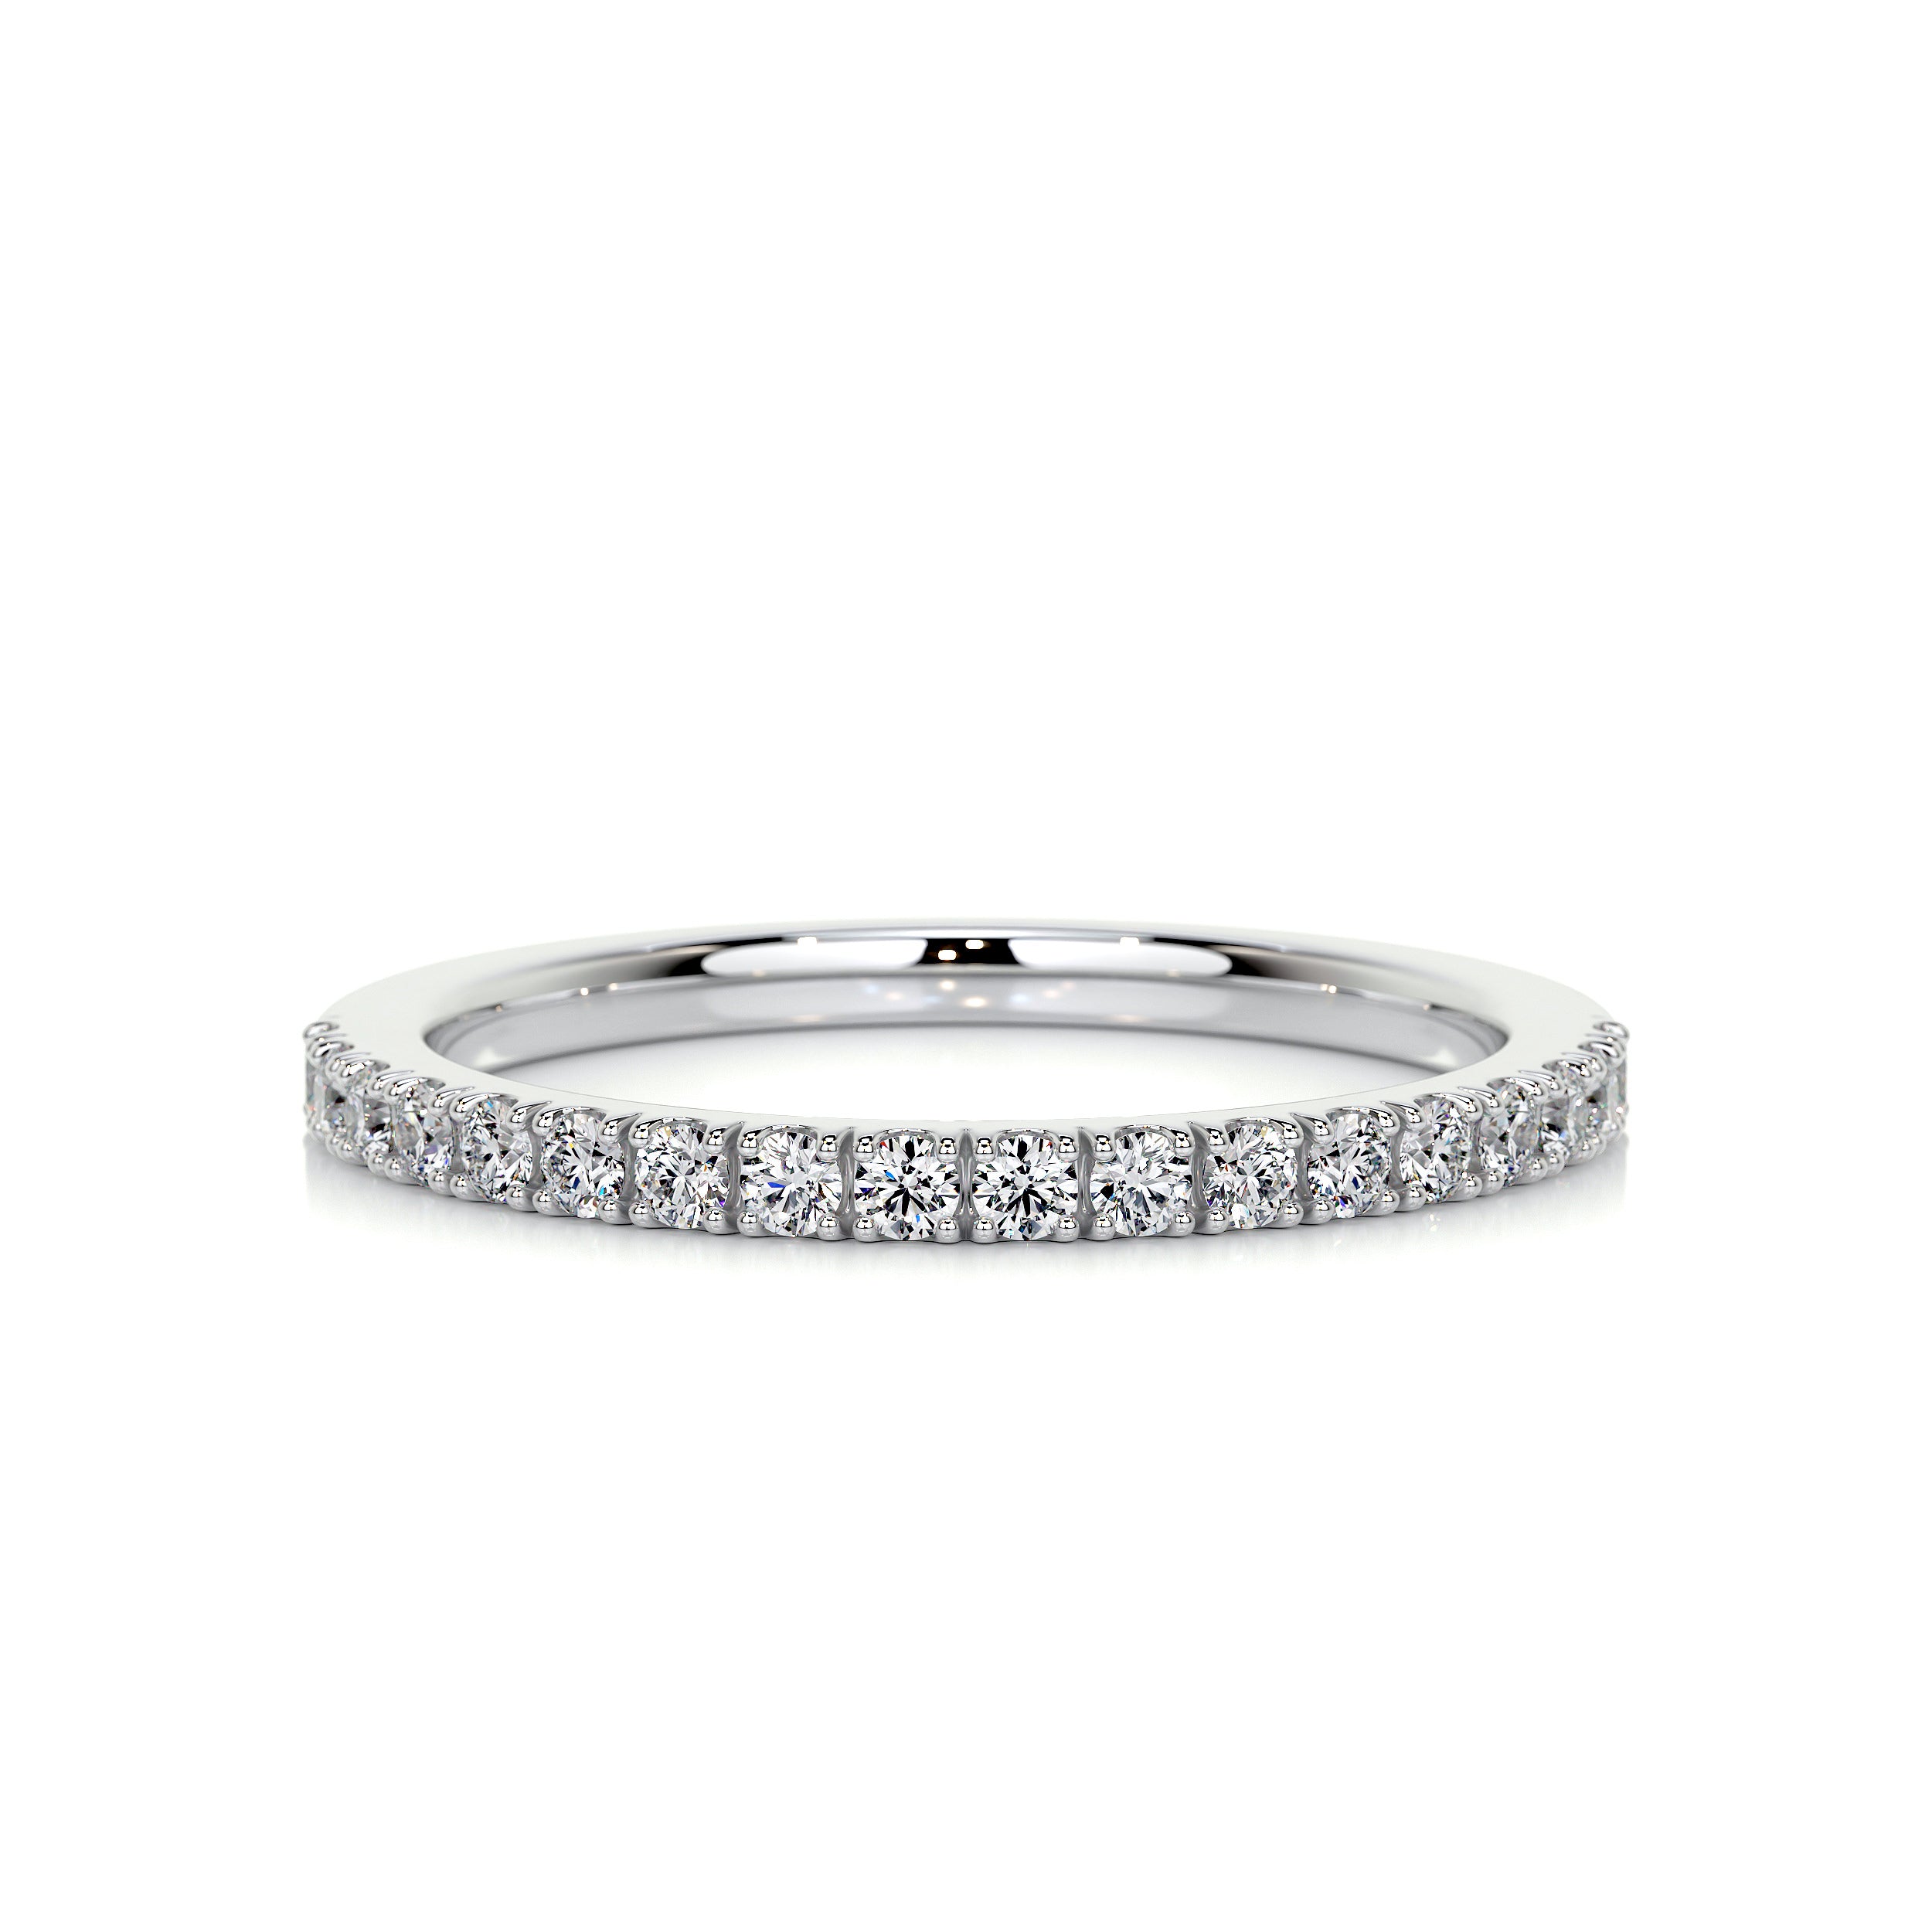 Stephanie Diamond Wedding Ring   (0.3 Carat) - 18K White Gold